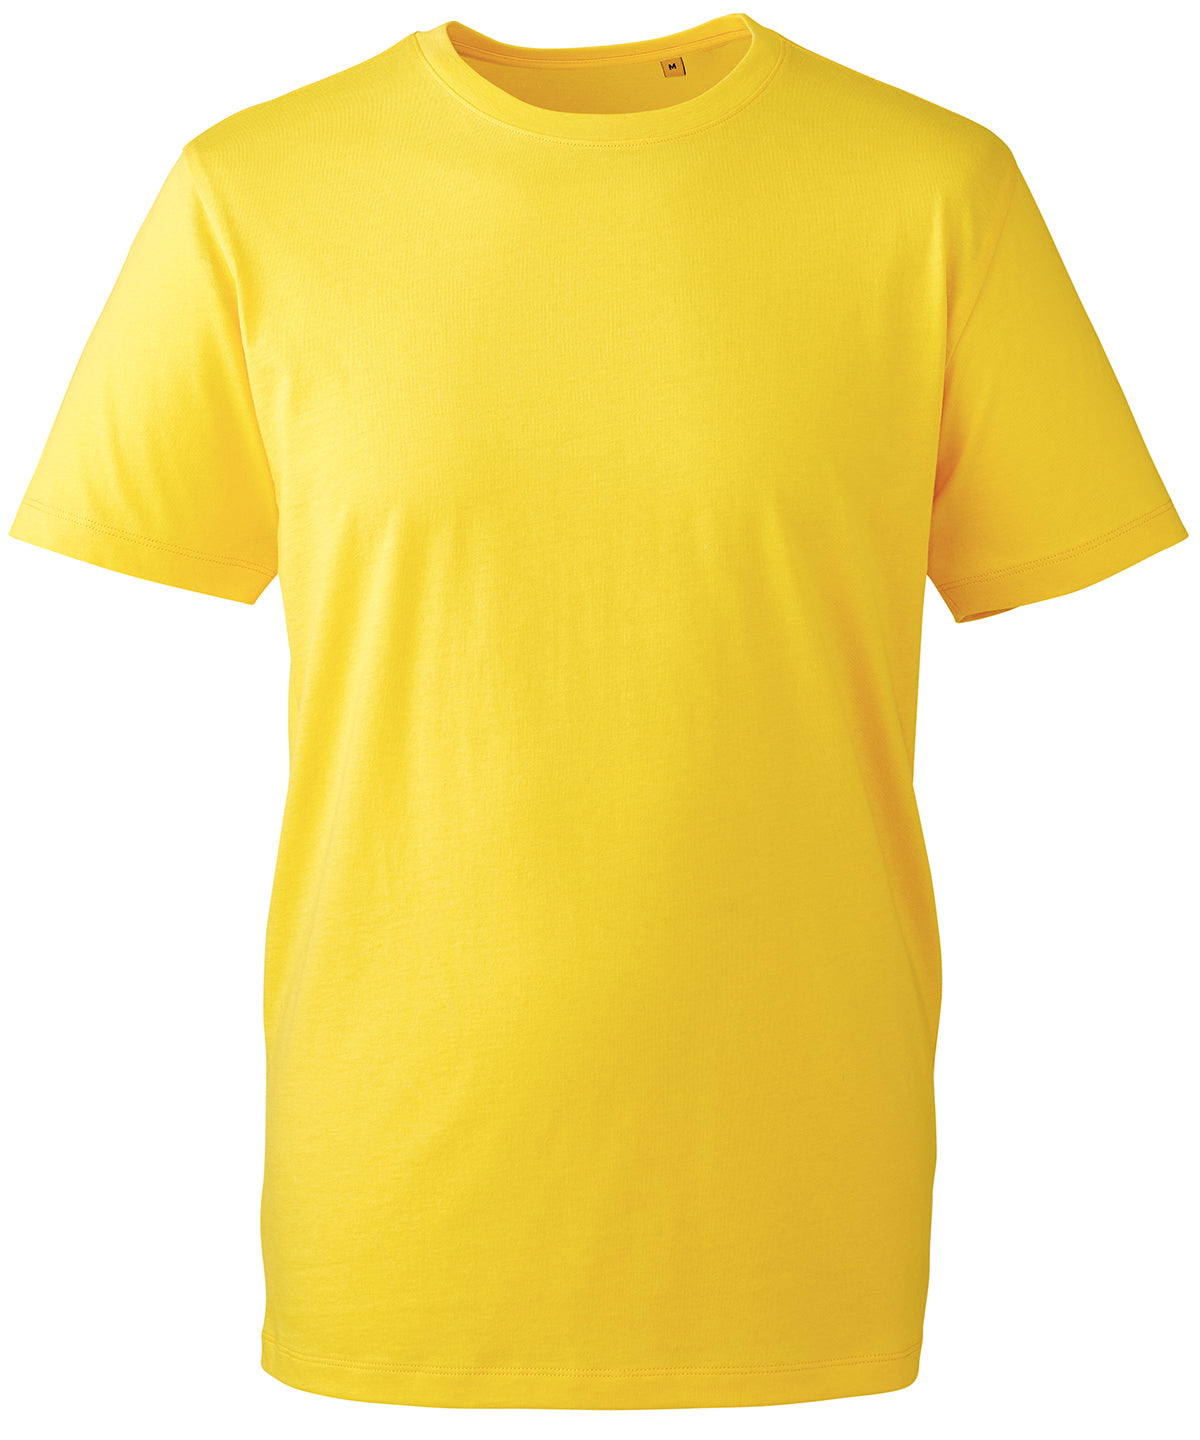 Personalised T-Shirts - Khaki Anthem Anthem t-shirt